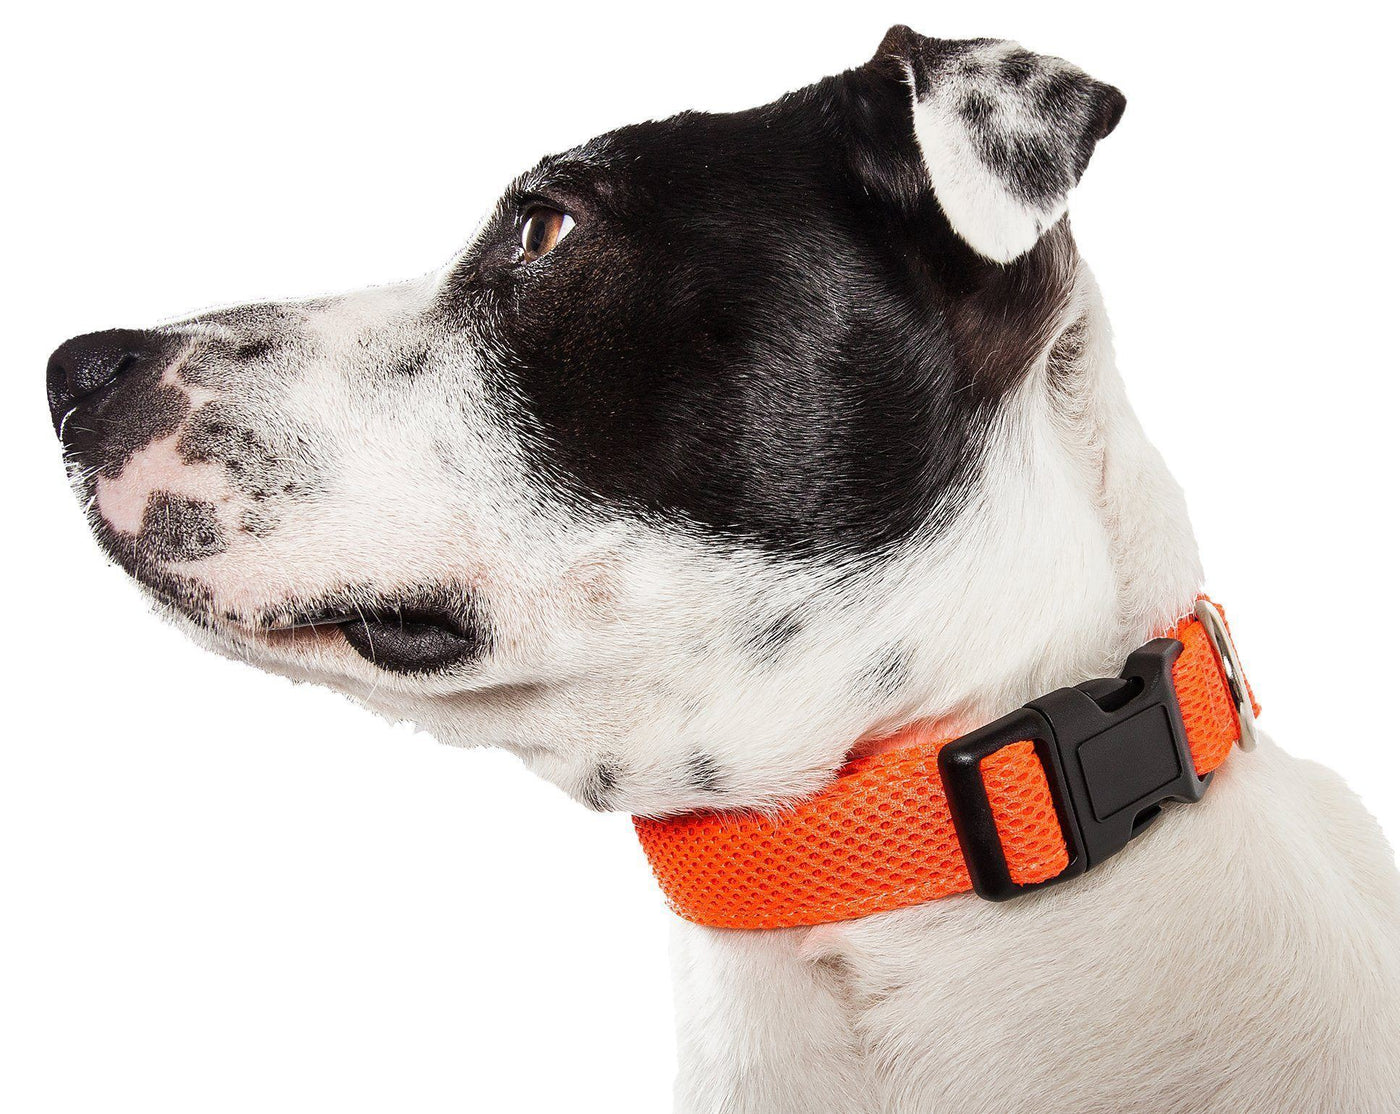 Reflective Mesh Padded Dog Collar - Best Pet Store